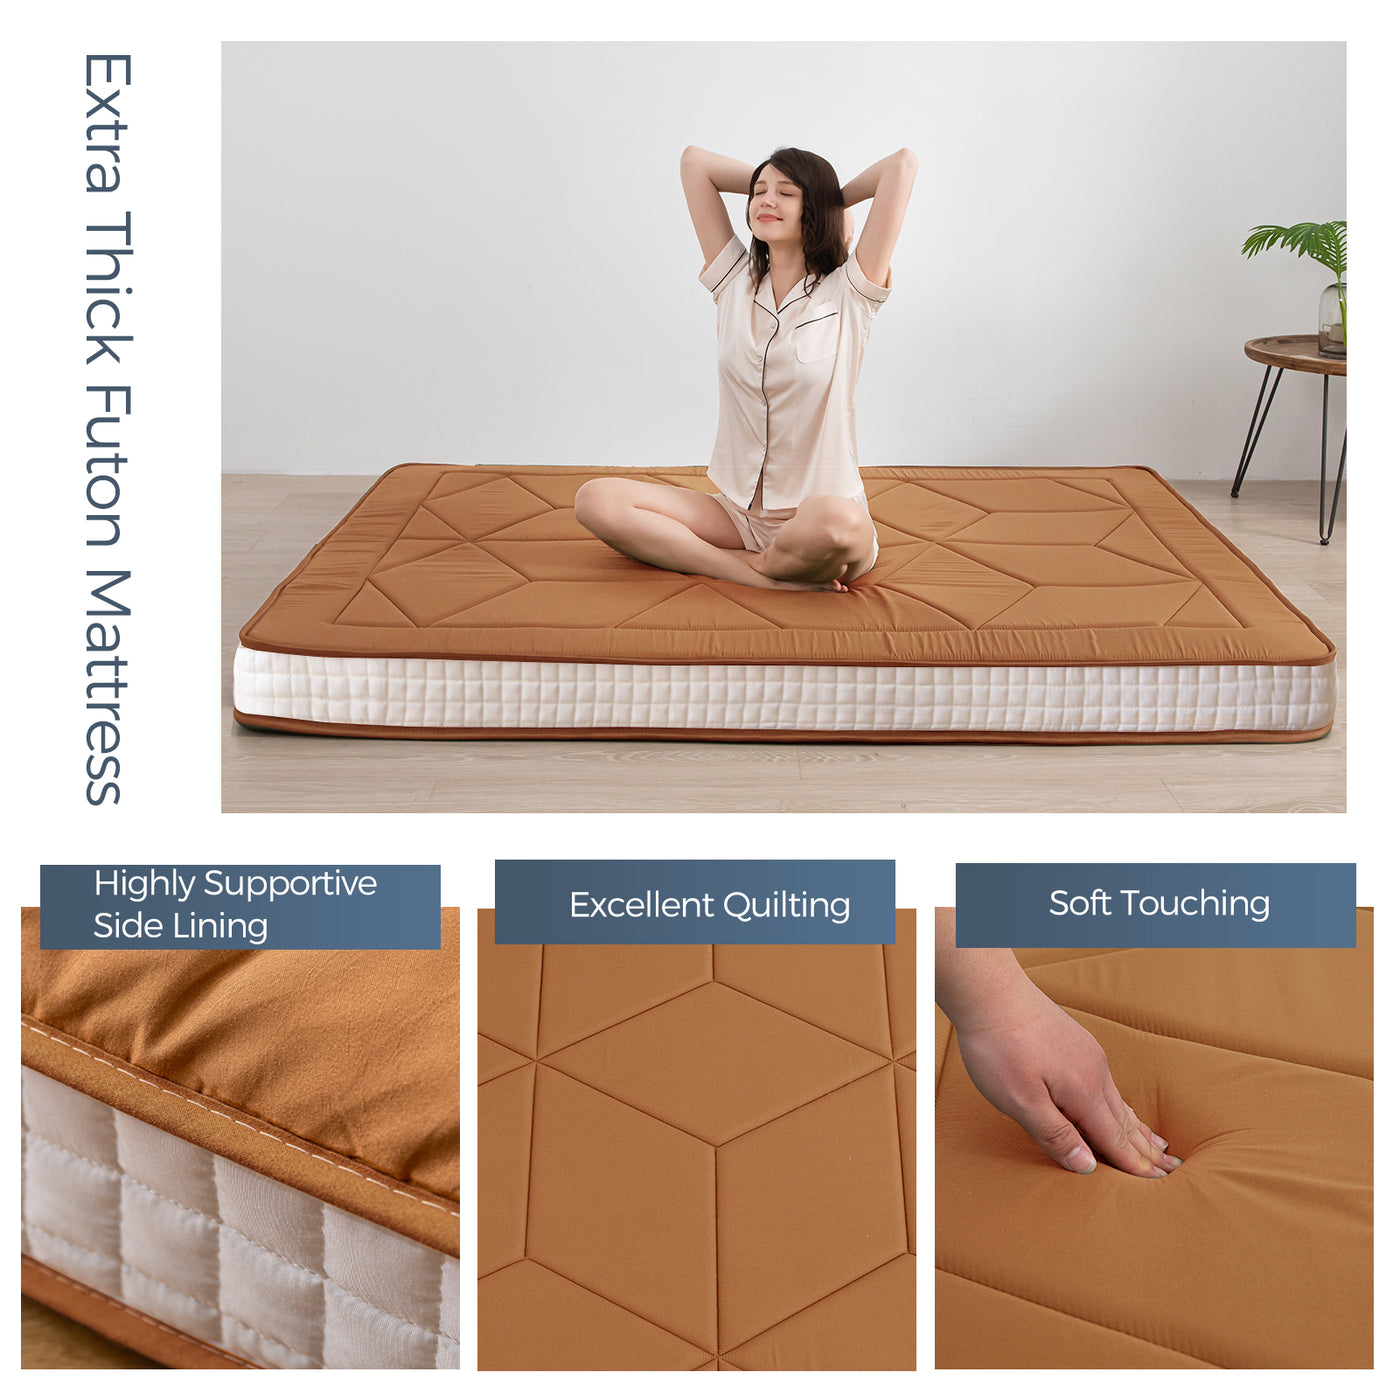 futon mattress#color_light-brown1